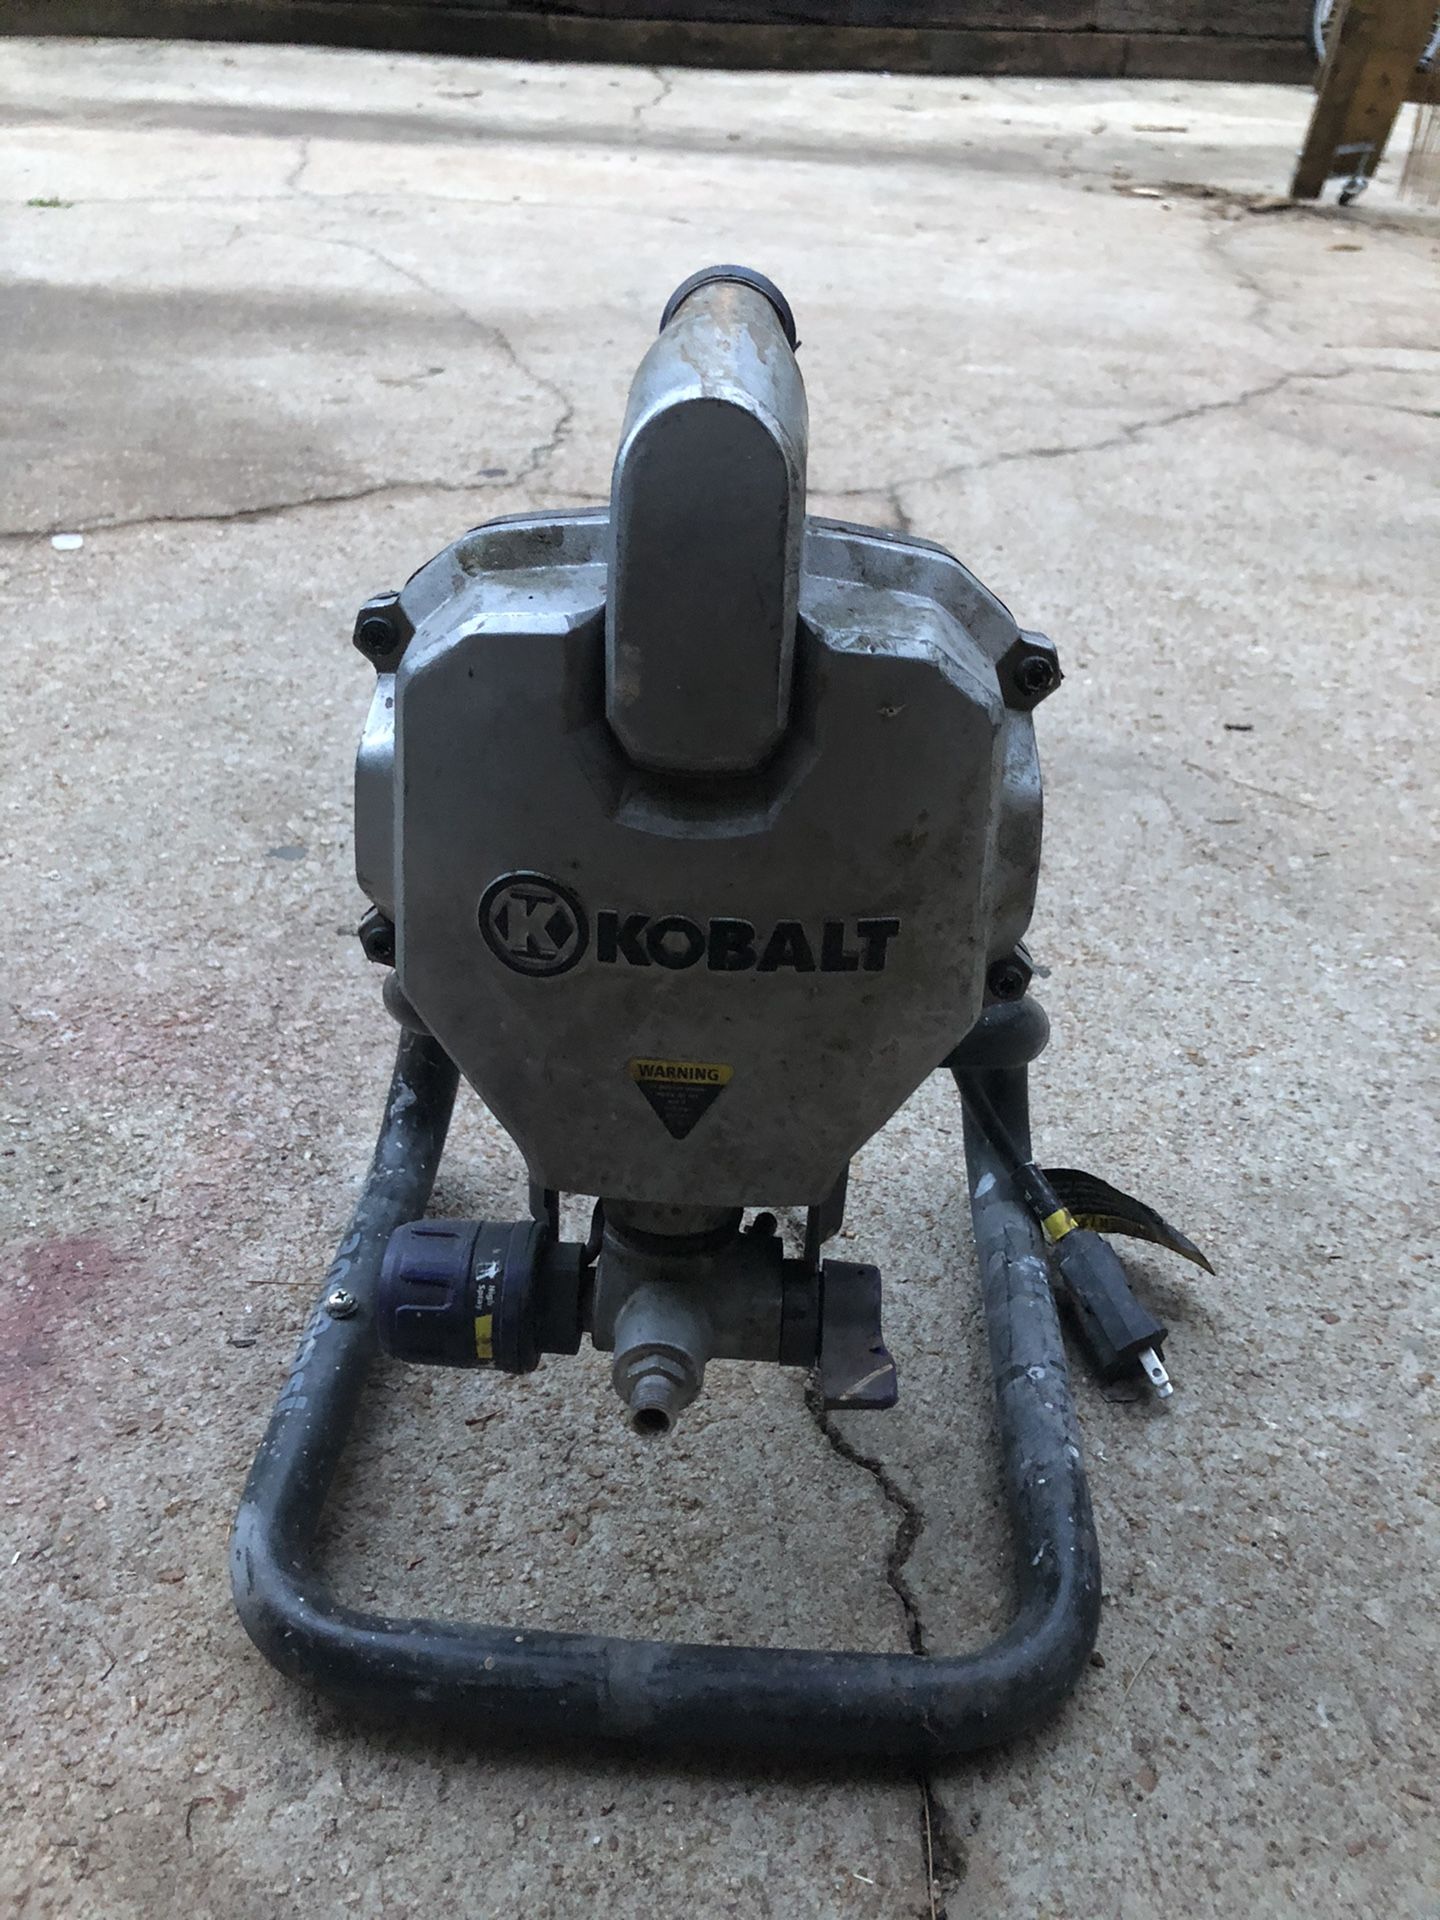 Kobalt 3000 psi airless sprayer